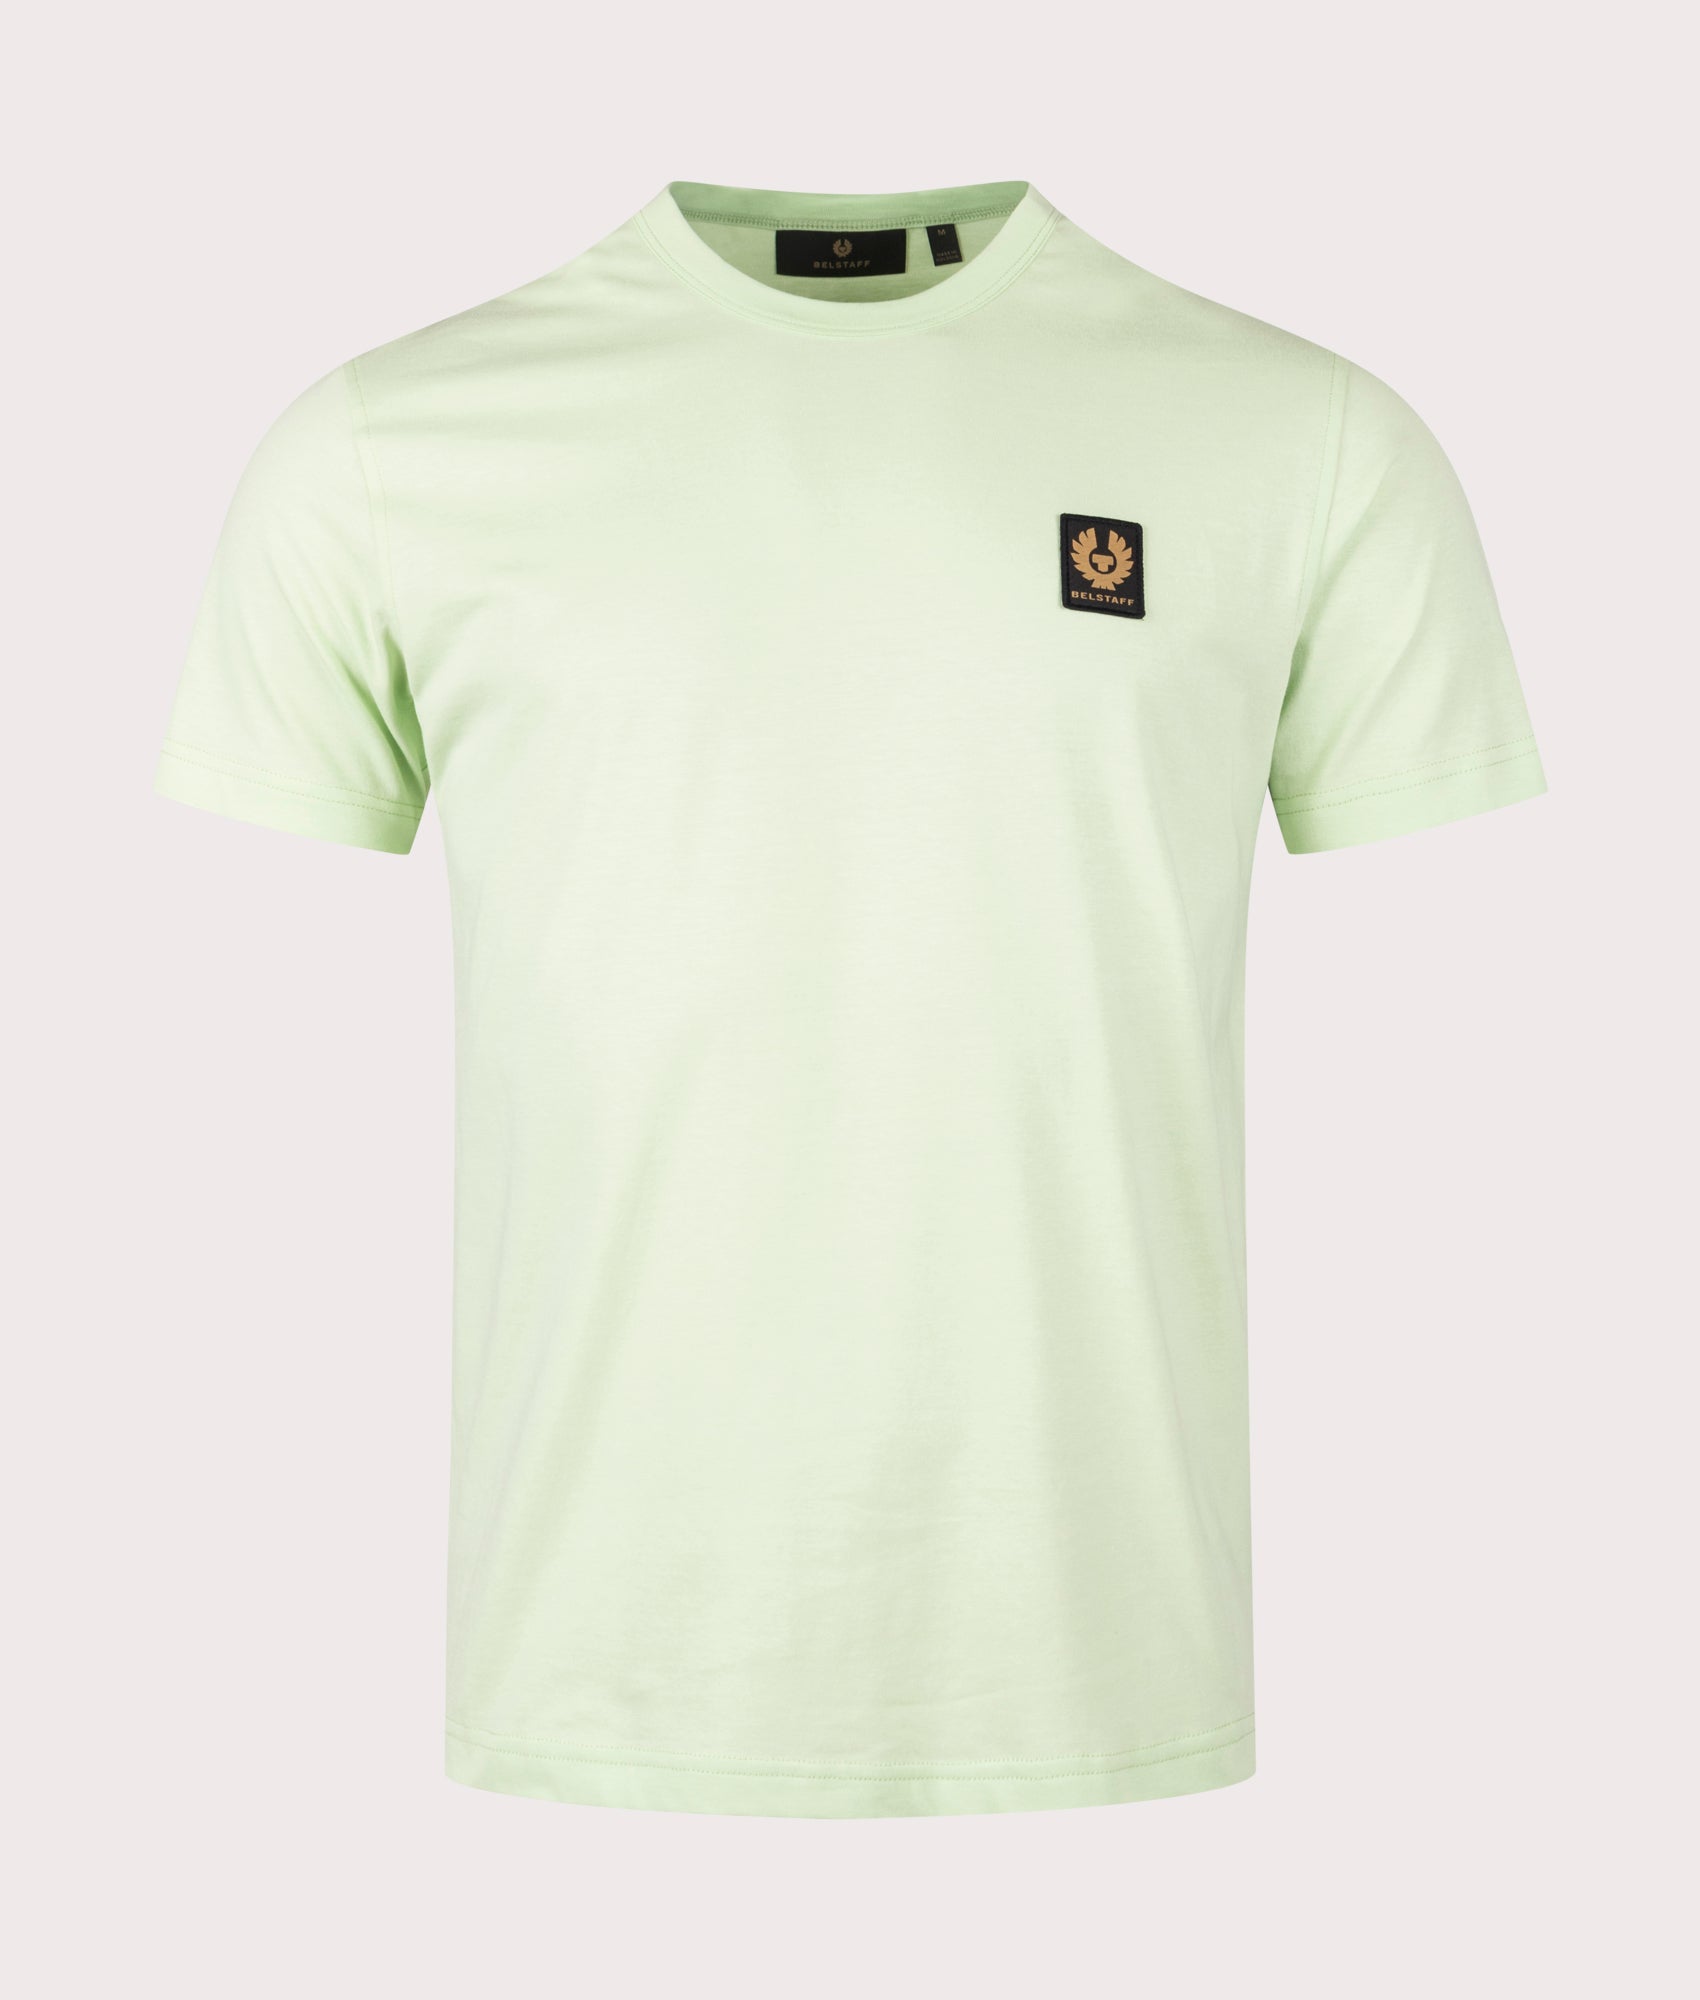 Belstaff Mens Belstaff T-Shirt - Colour: New Leaf Green - Size: Large